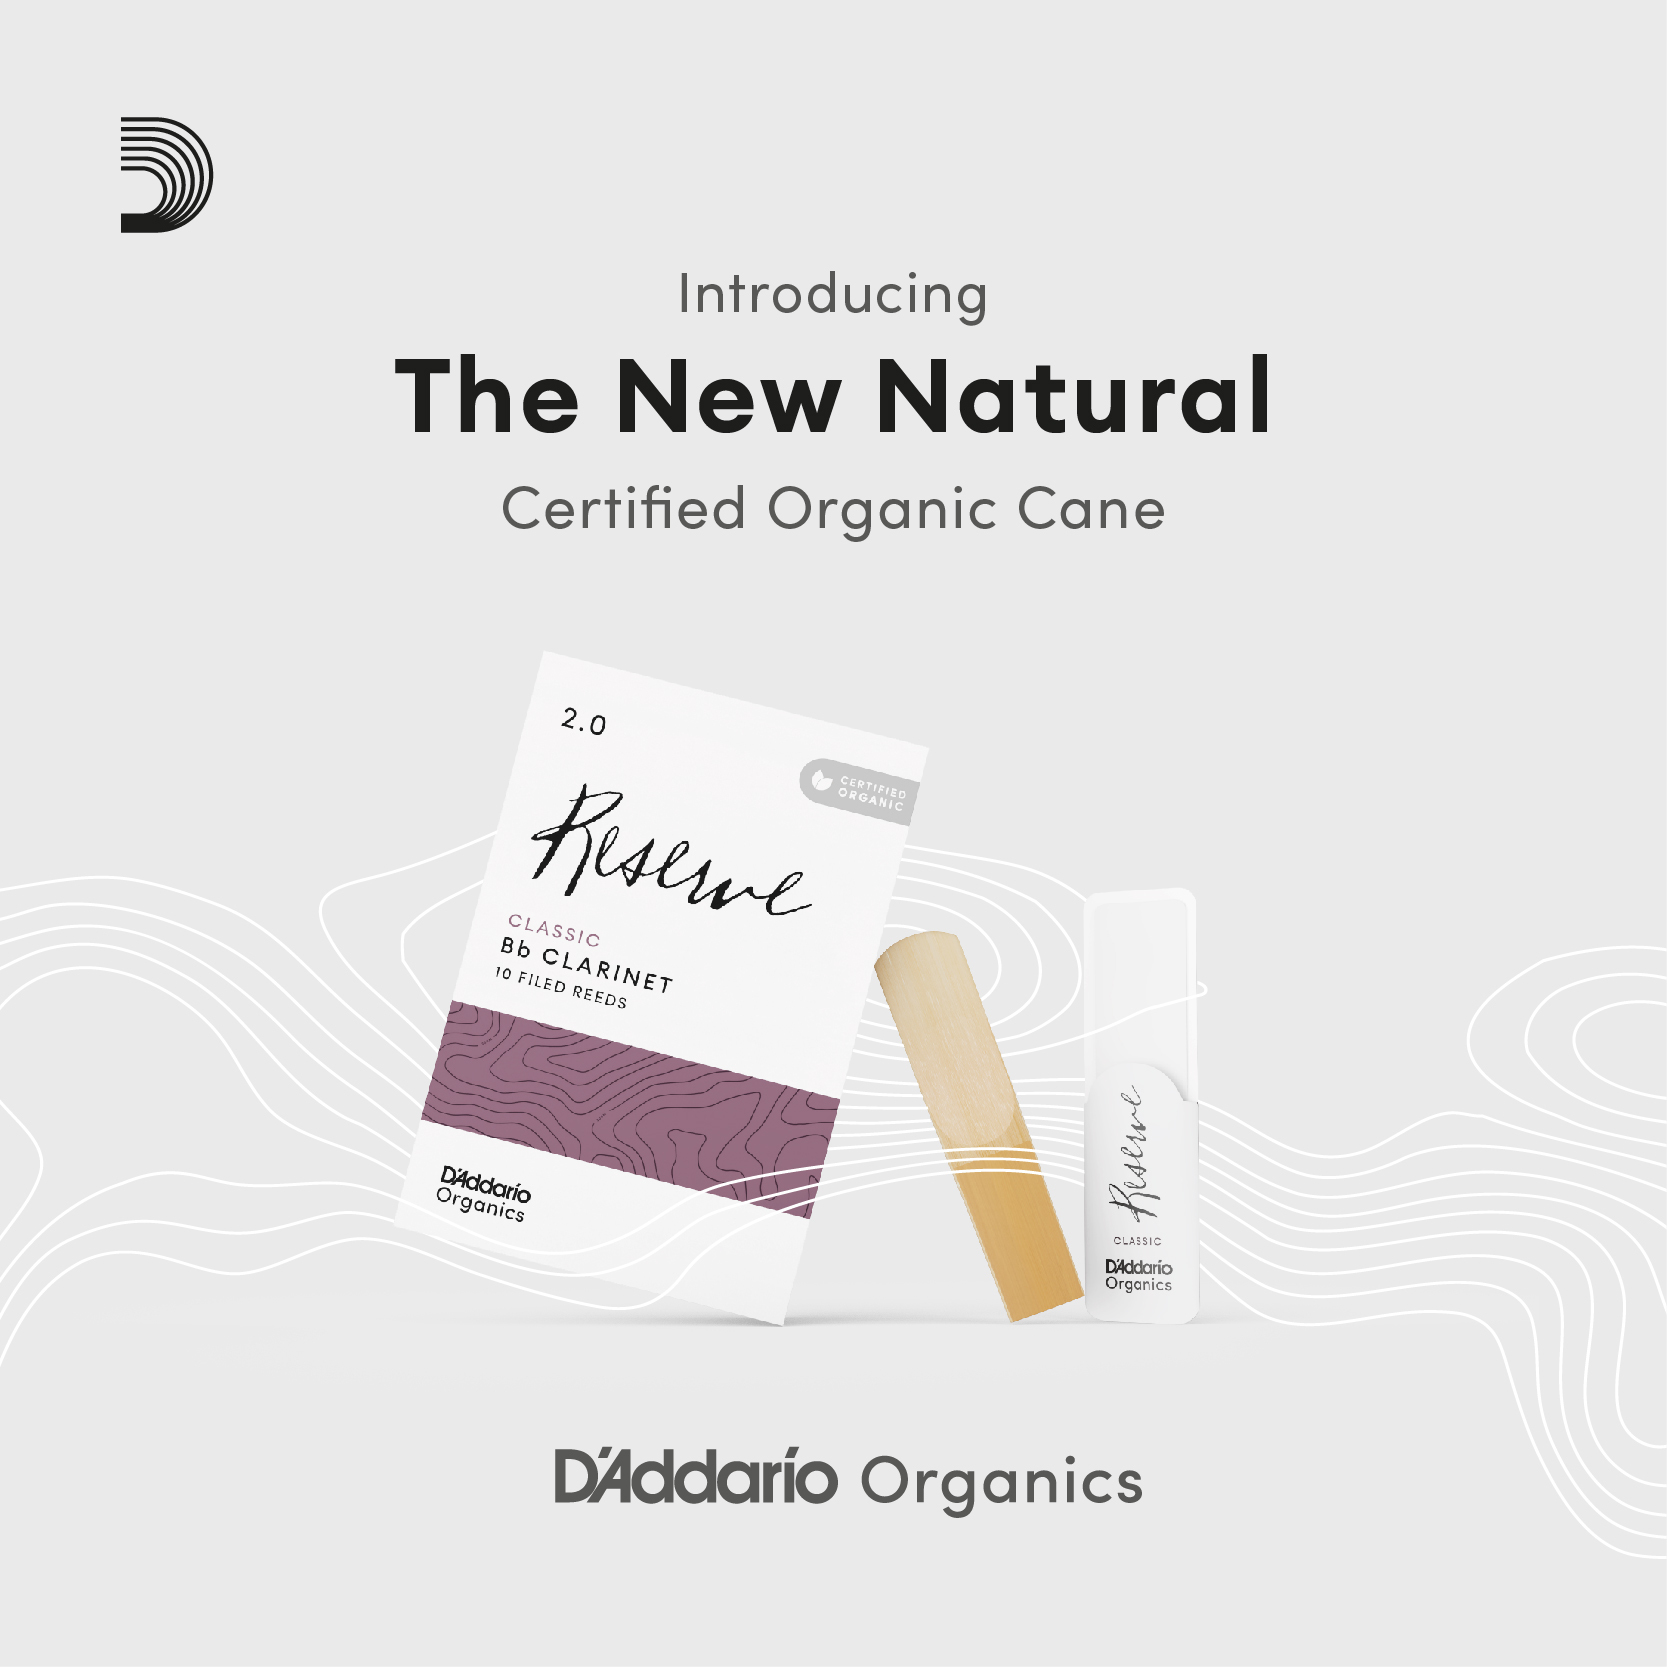 D'Addario Organics: The New Natural. Certified Organic Cane.